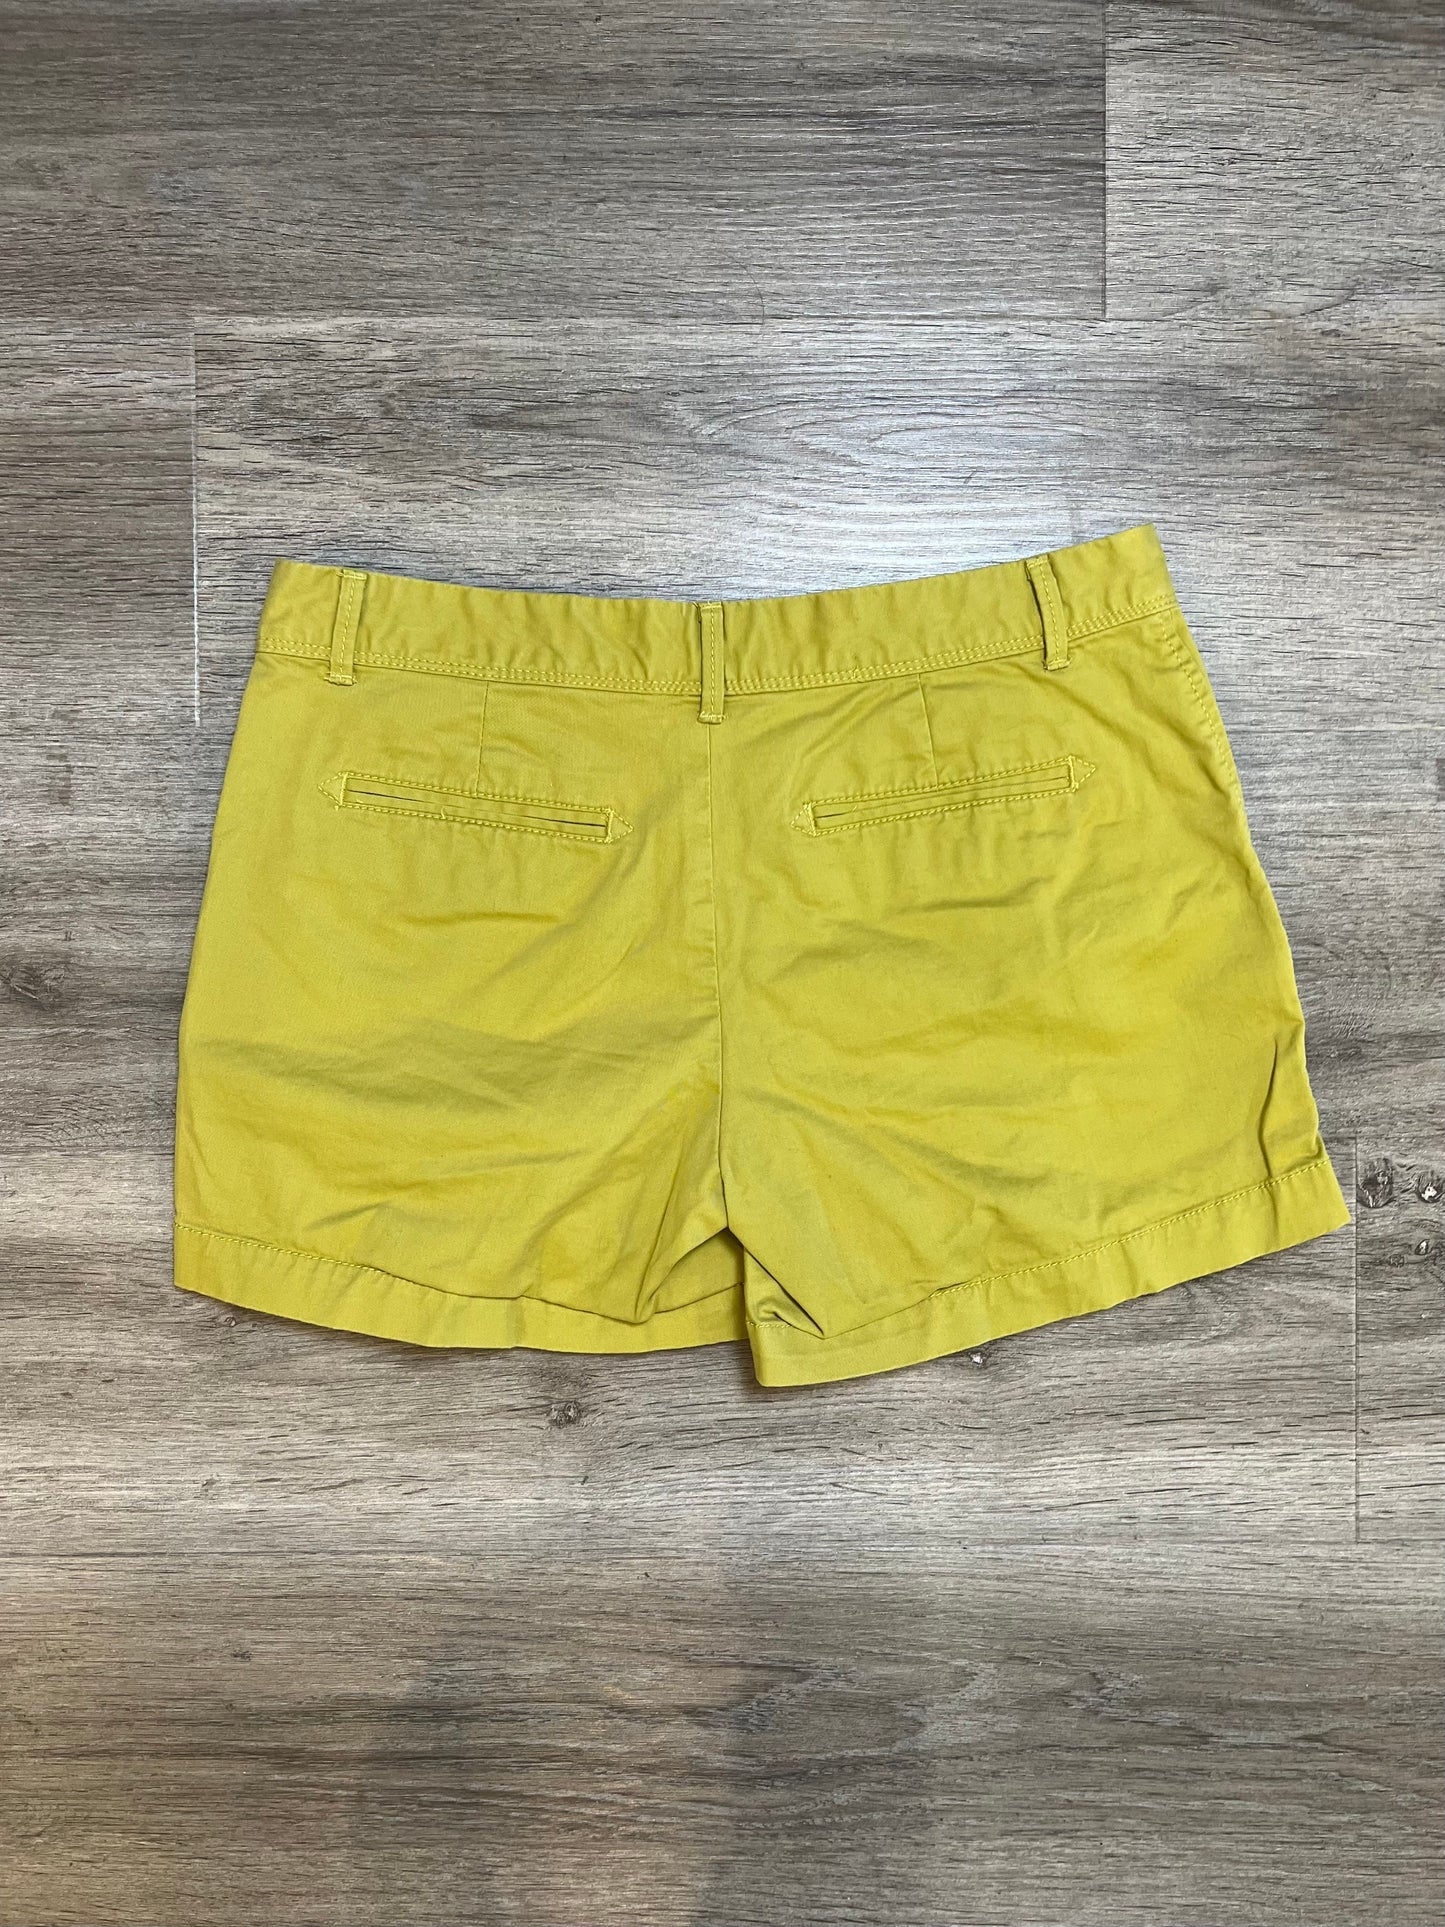 Shorts By Banana Republic  Size: XS